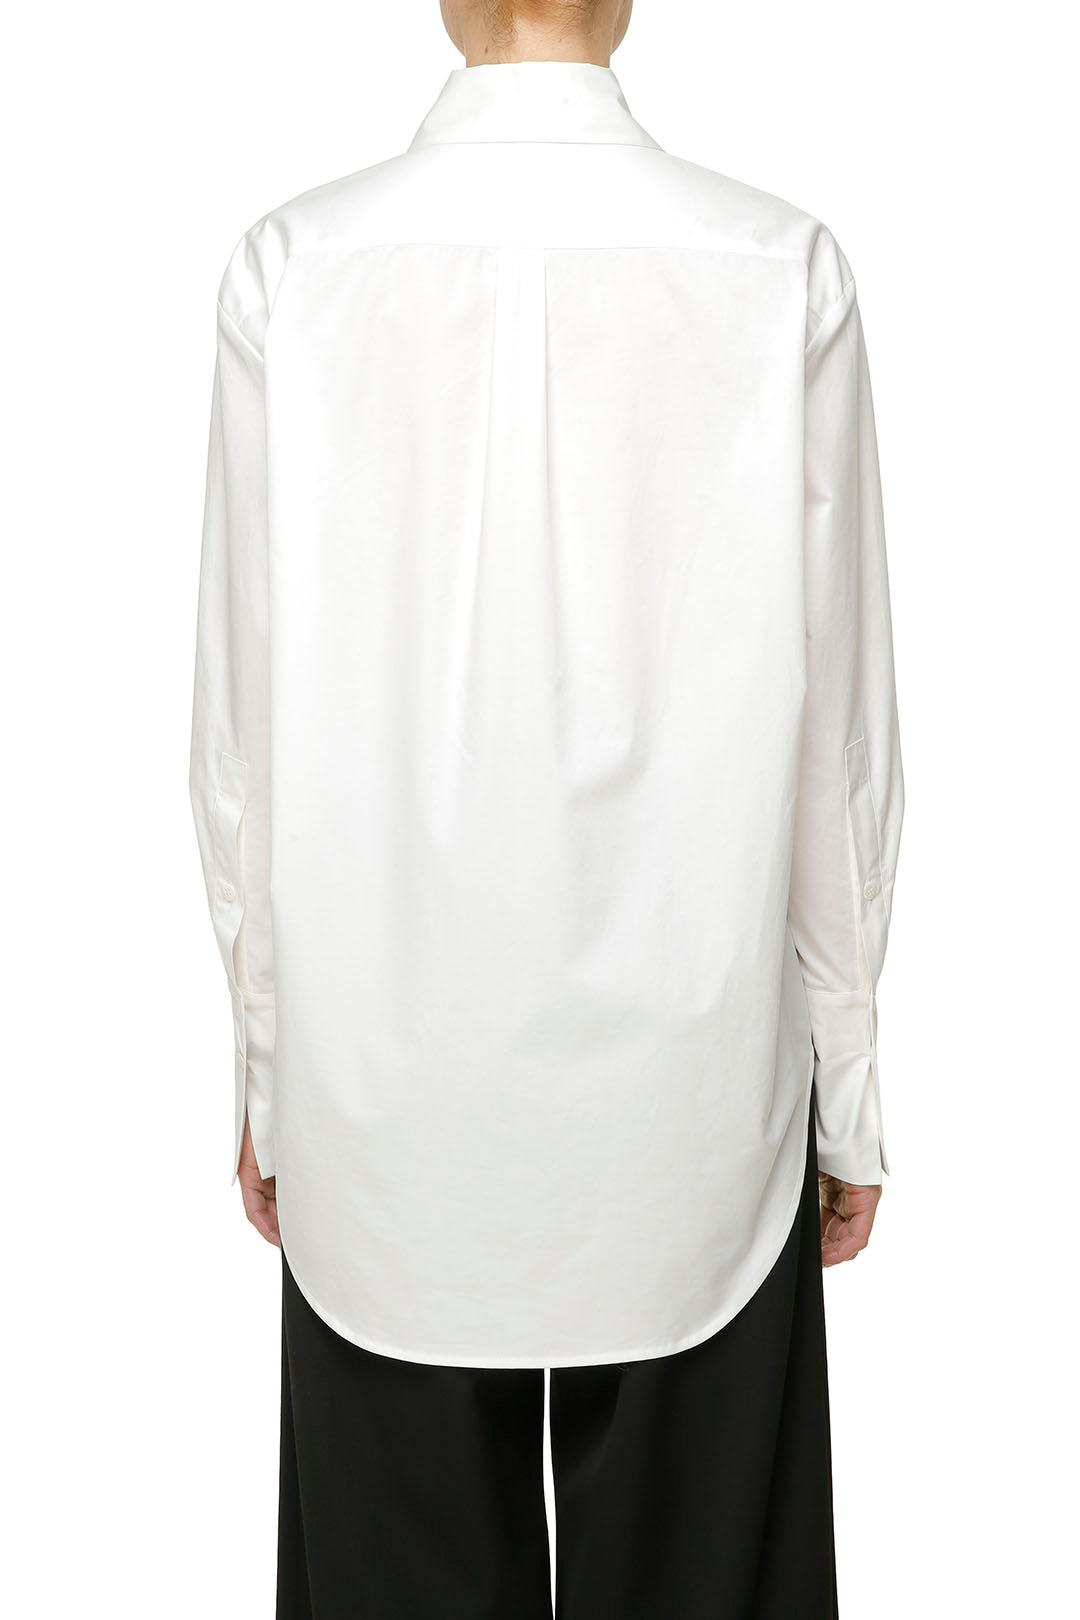 White oversized cotton shirt